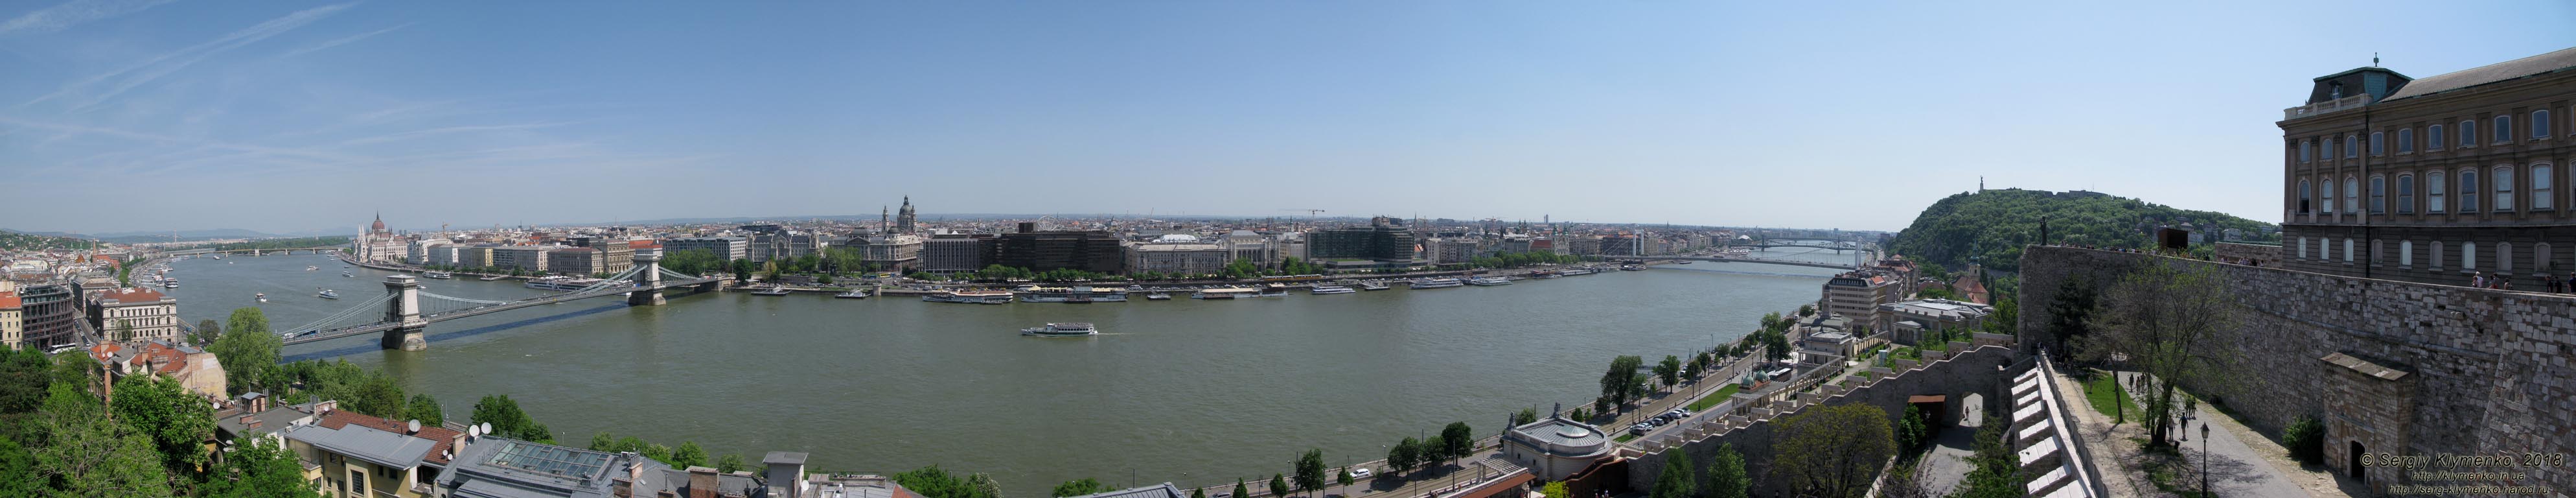 Будапешт (Budapest), Венгрия (Magyarország). Фото. Вид на Дунай и Пешт от здания Королевского дворца (Budavári Palota). Панорама ~210°.